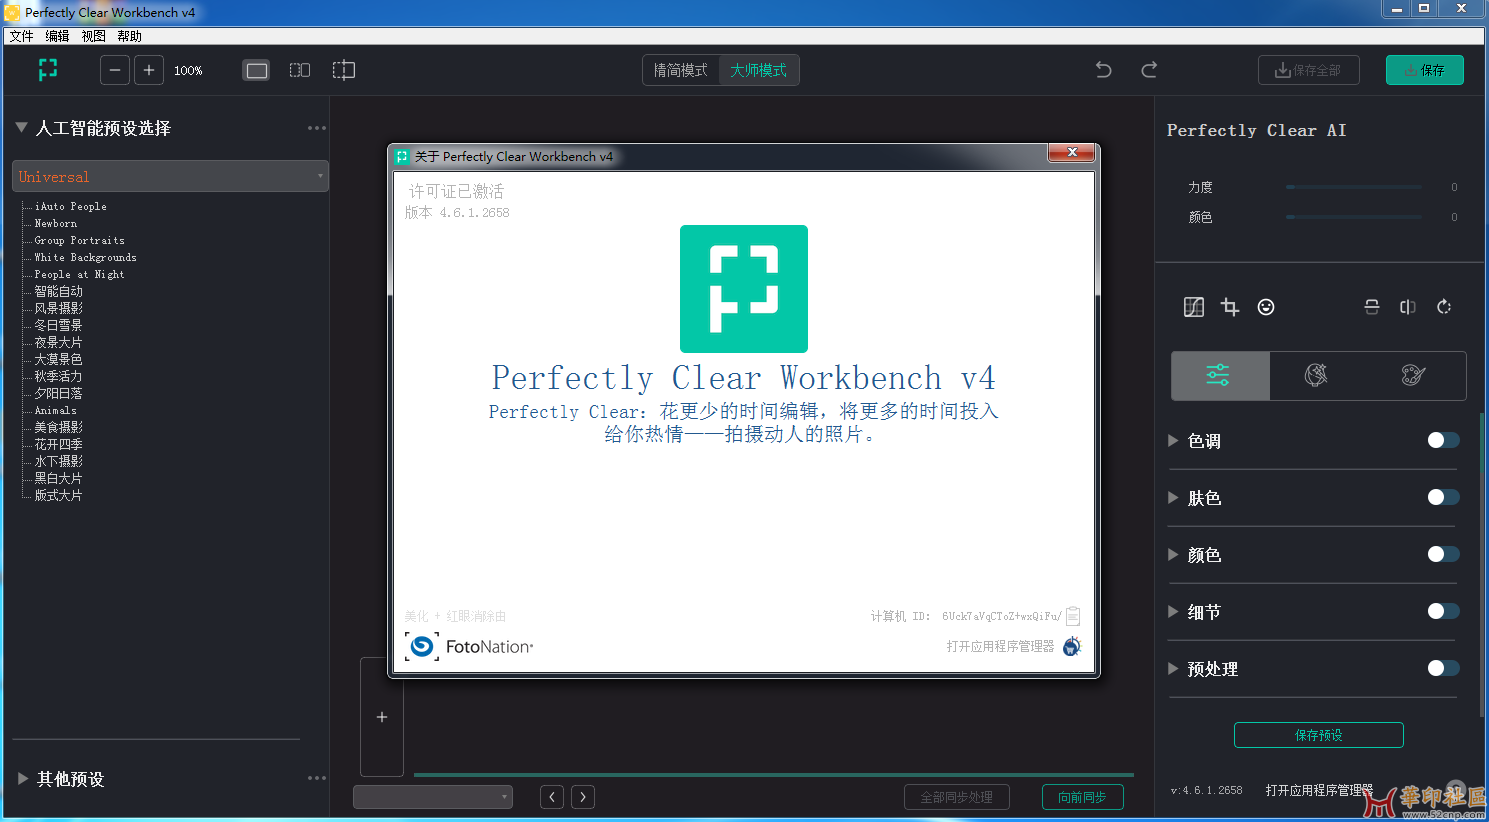 Perfectly Clear WorkBench 4.6.1.2658 图像清晰度处理便携版{tag}(1)